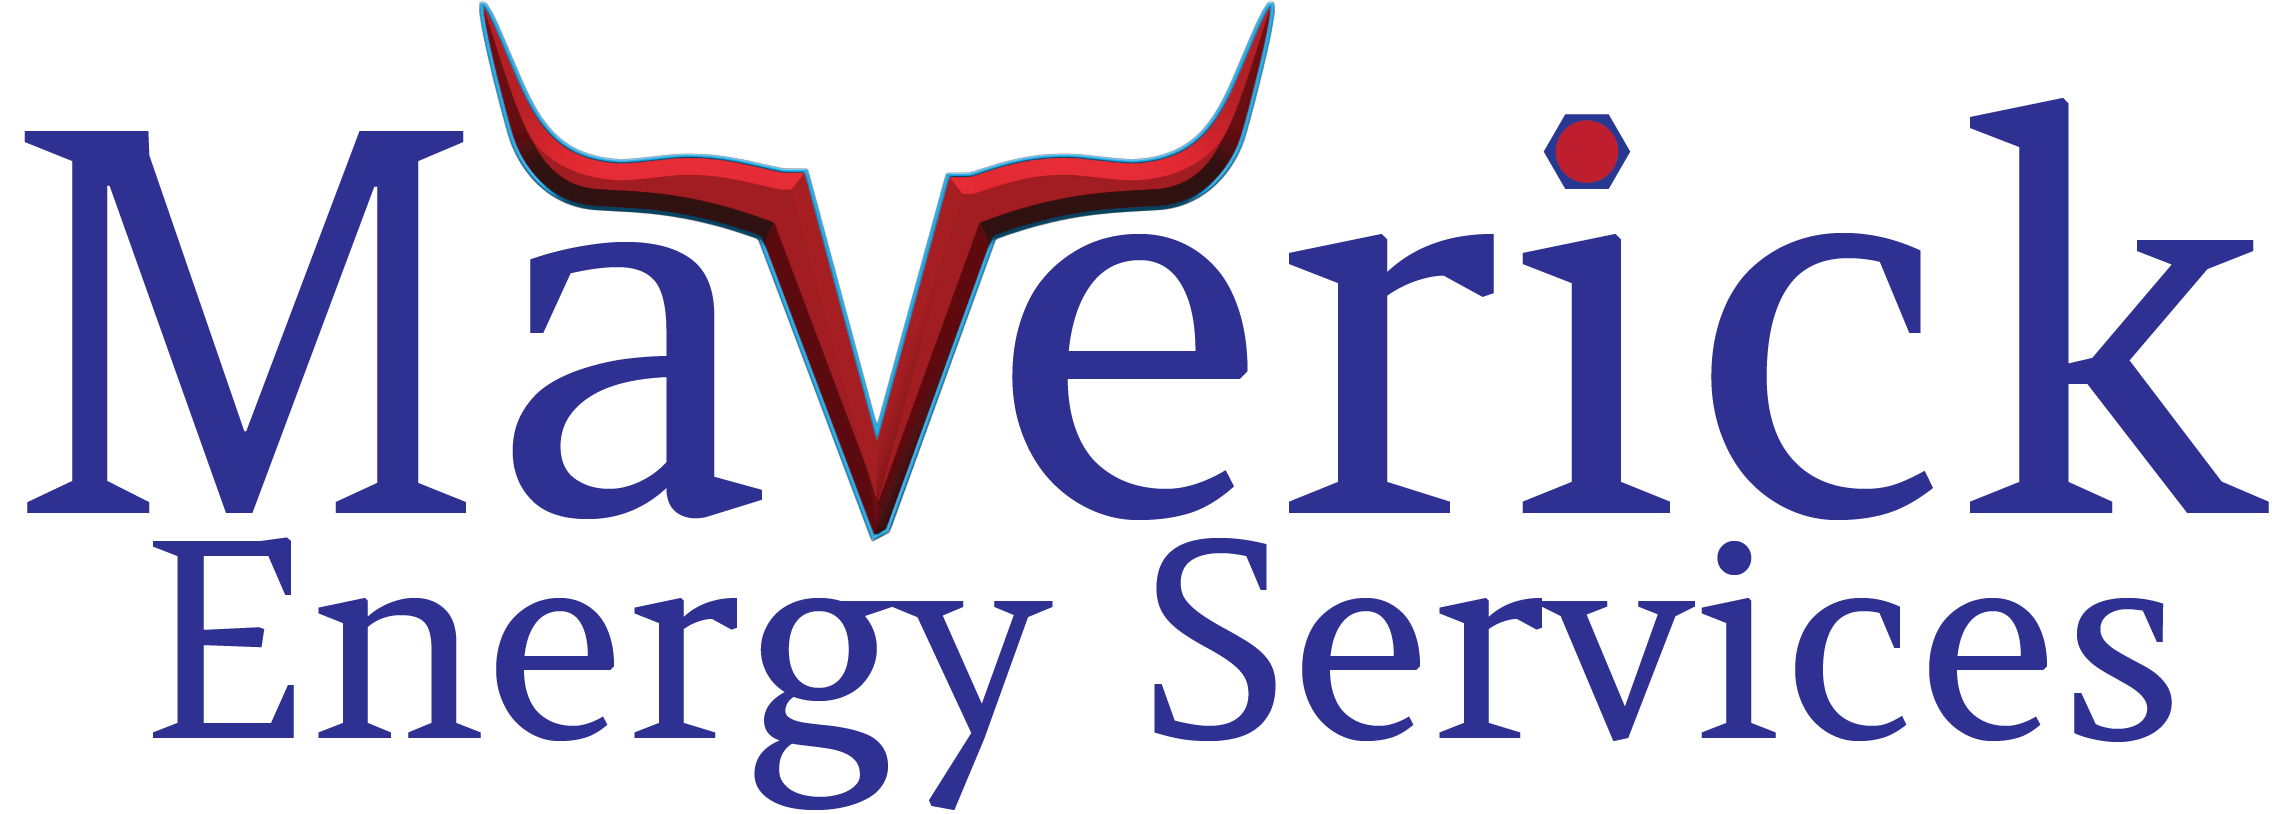 Maverick Energy Services